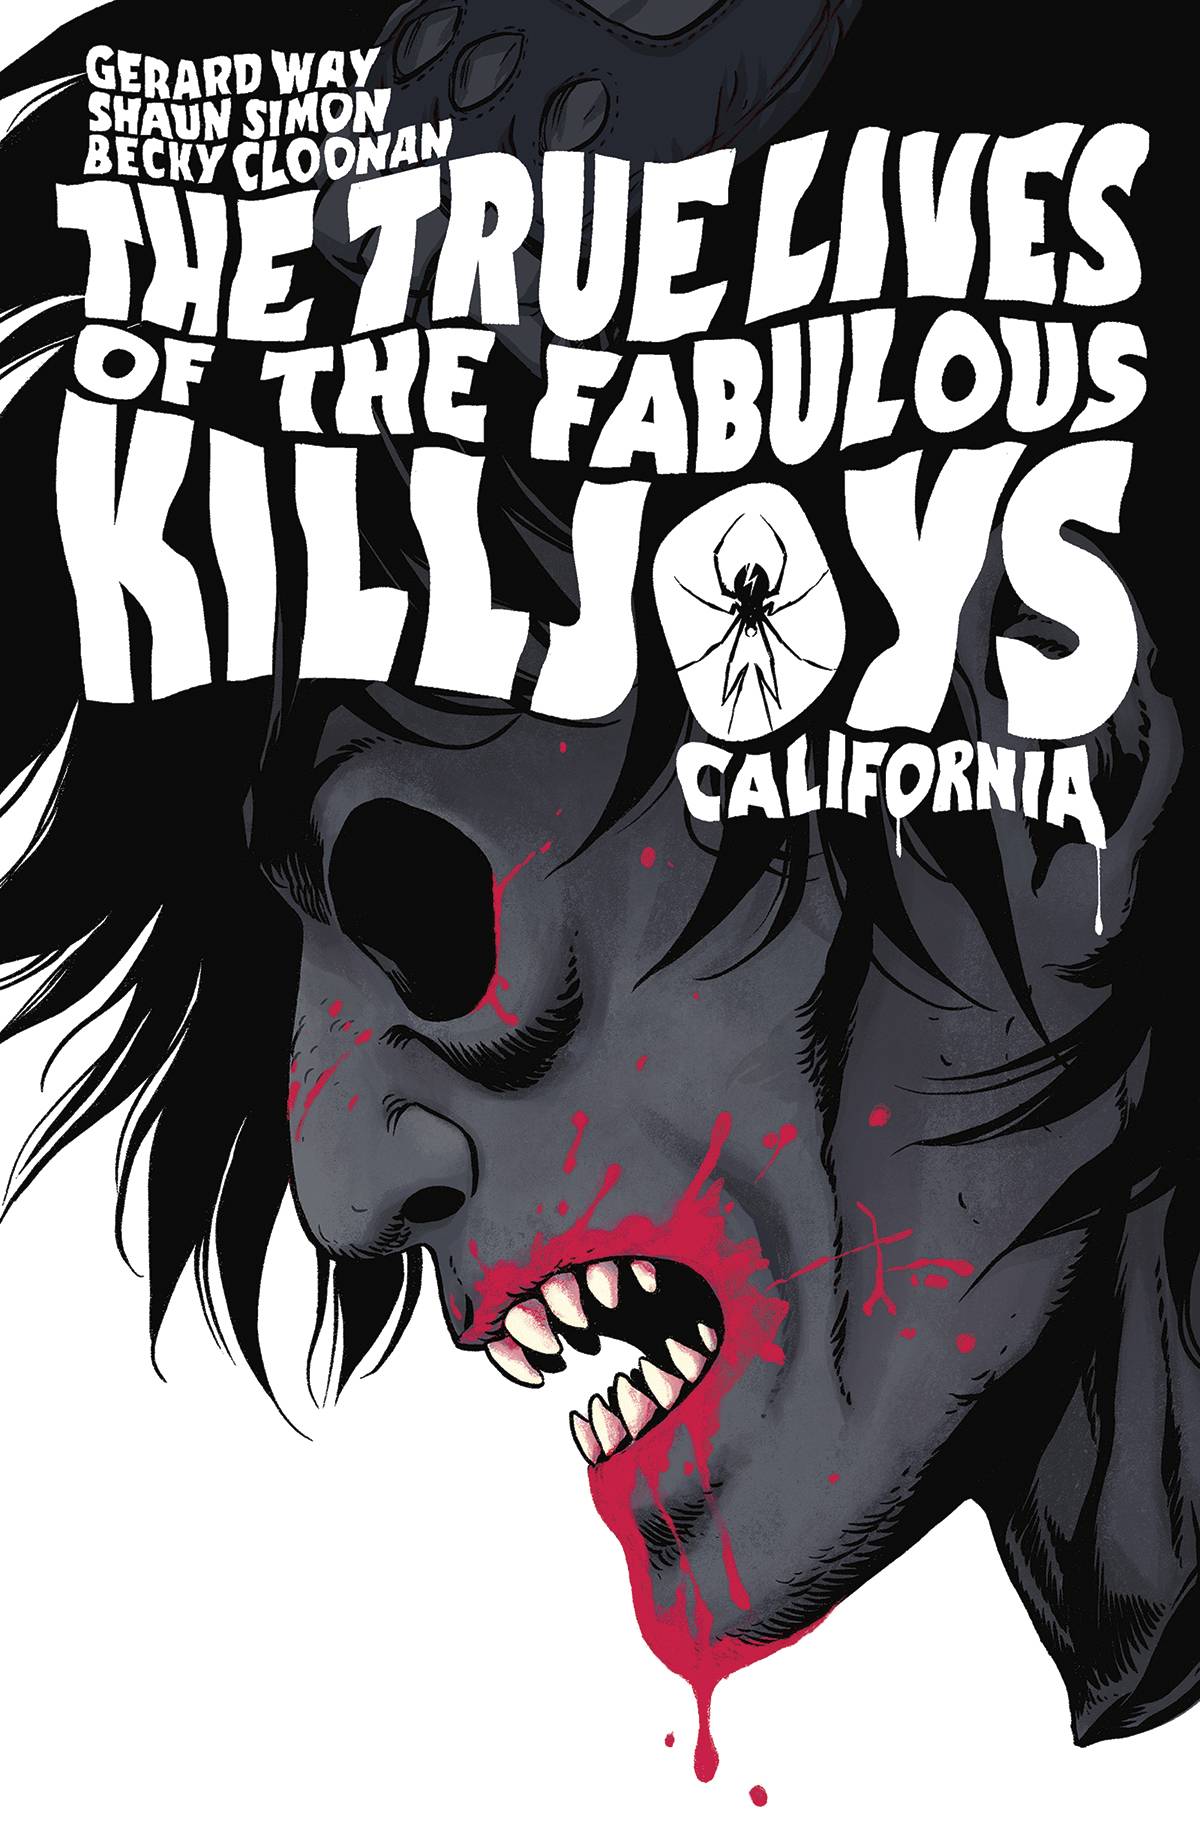 True Lives of the Fabulous Killjoys (2013) California - Library Edition HC